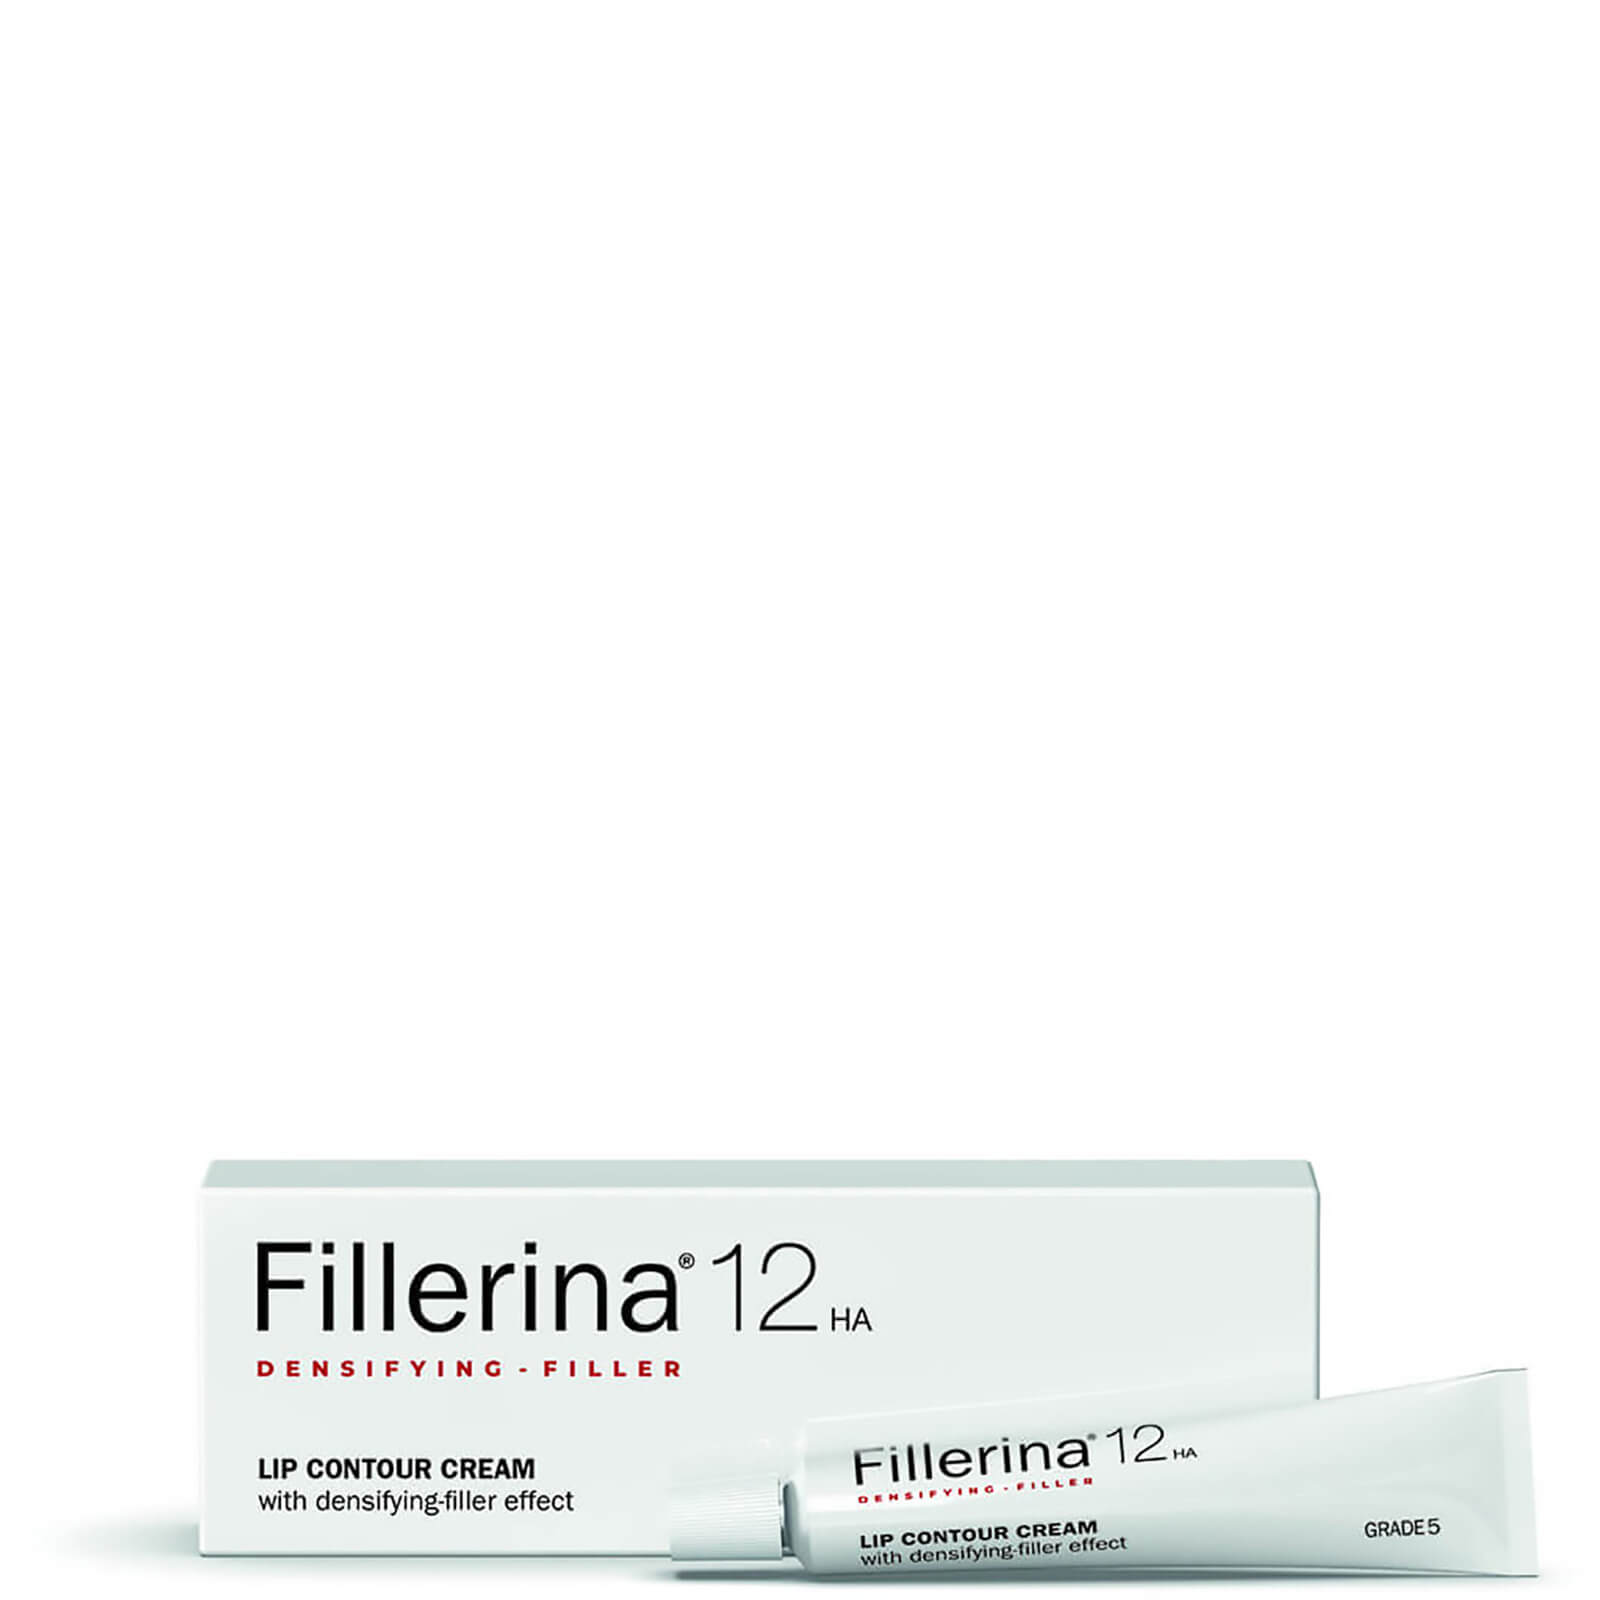 Fillerina 12 Densifying-Filler Lip Contour Cream - Grade 5 50ml